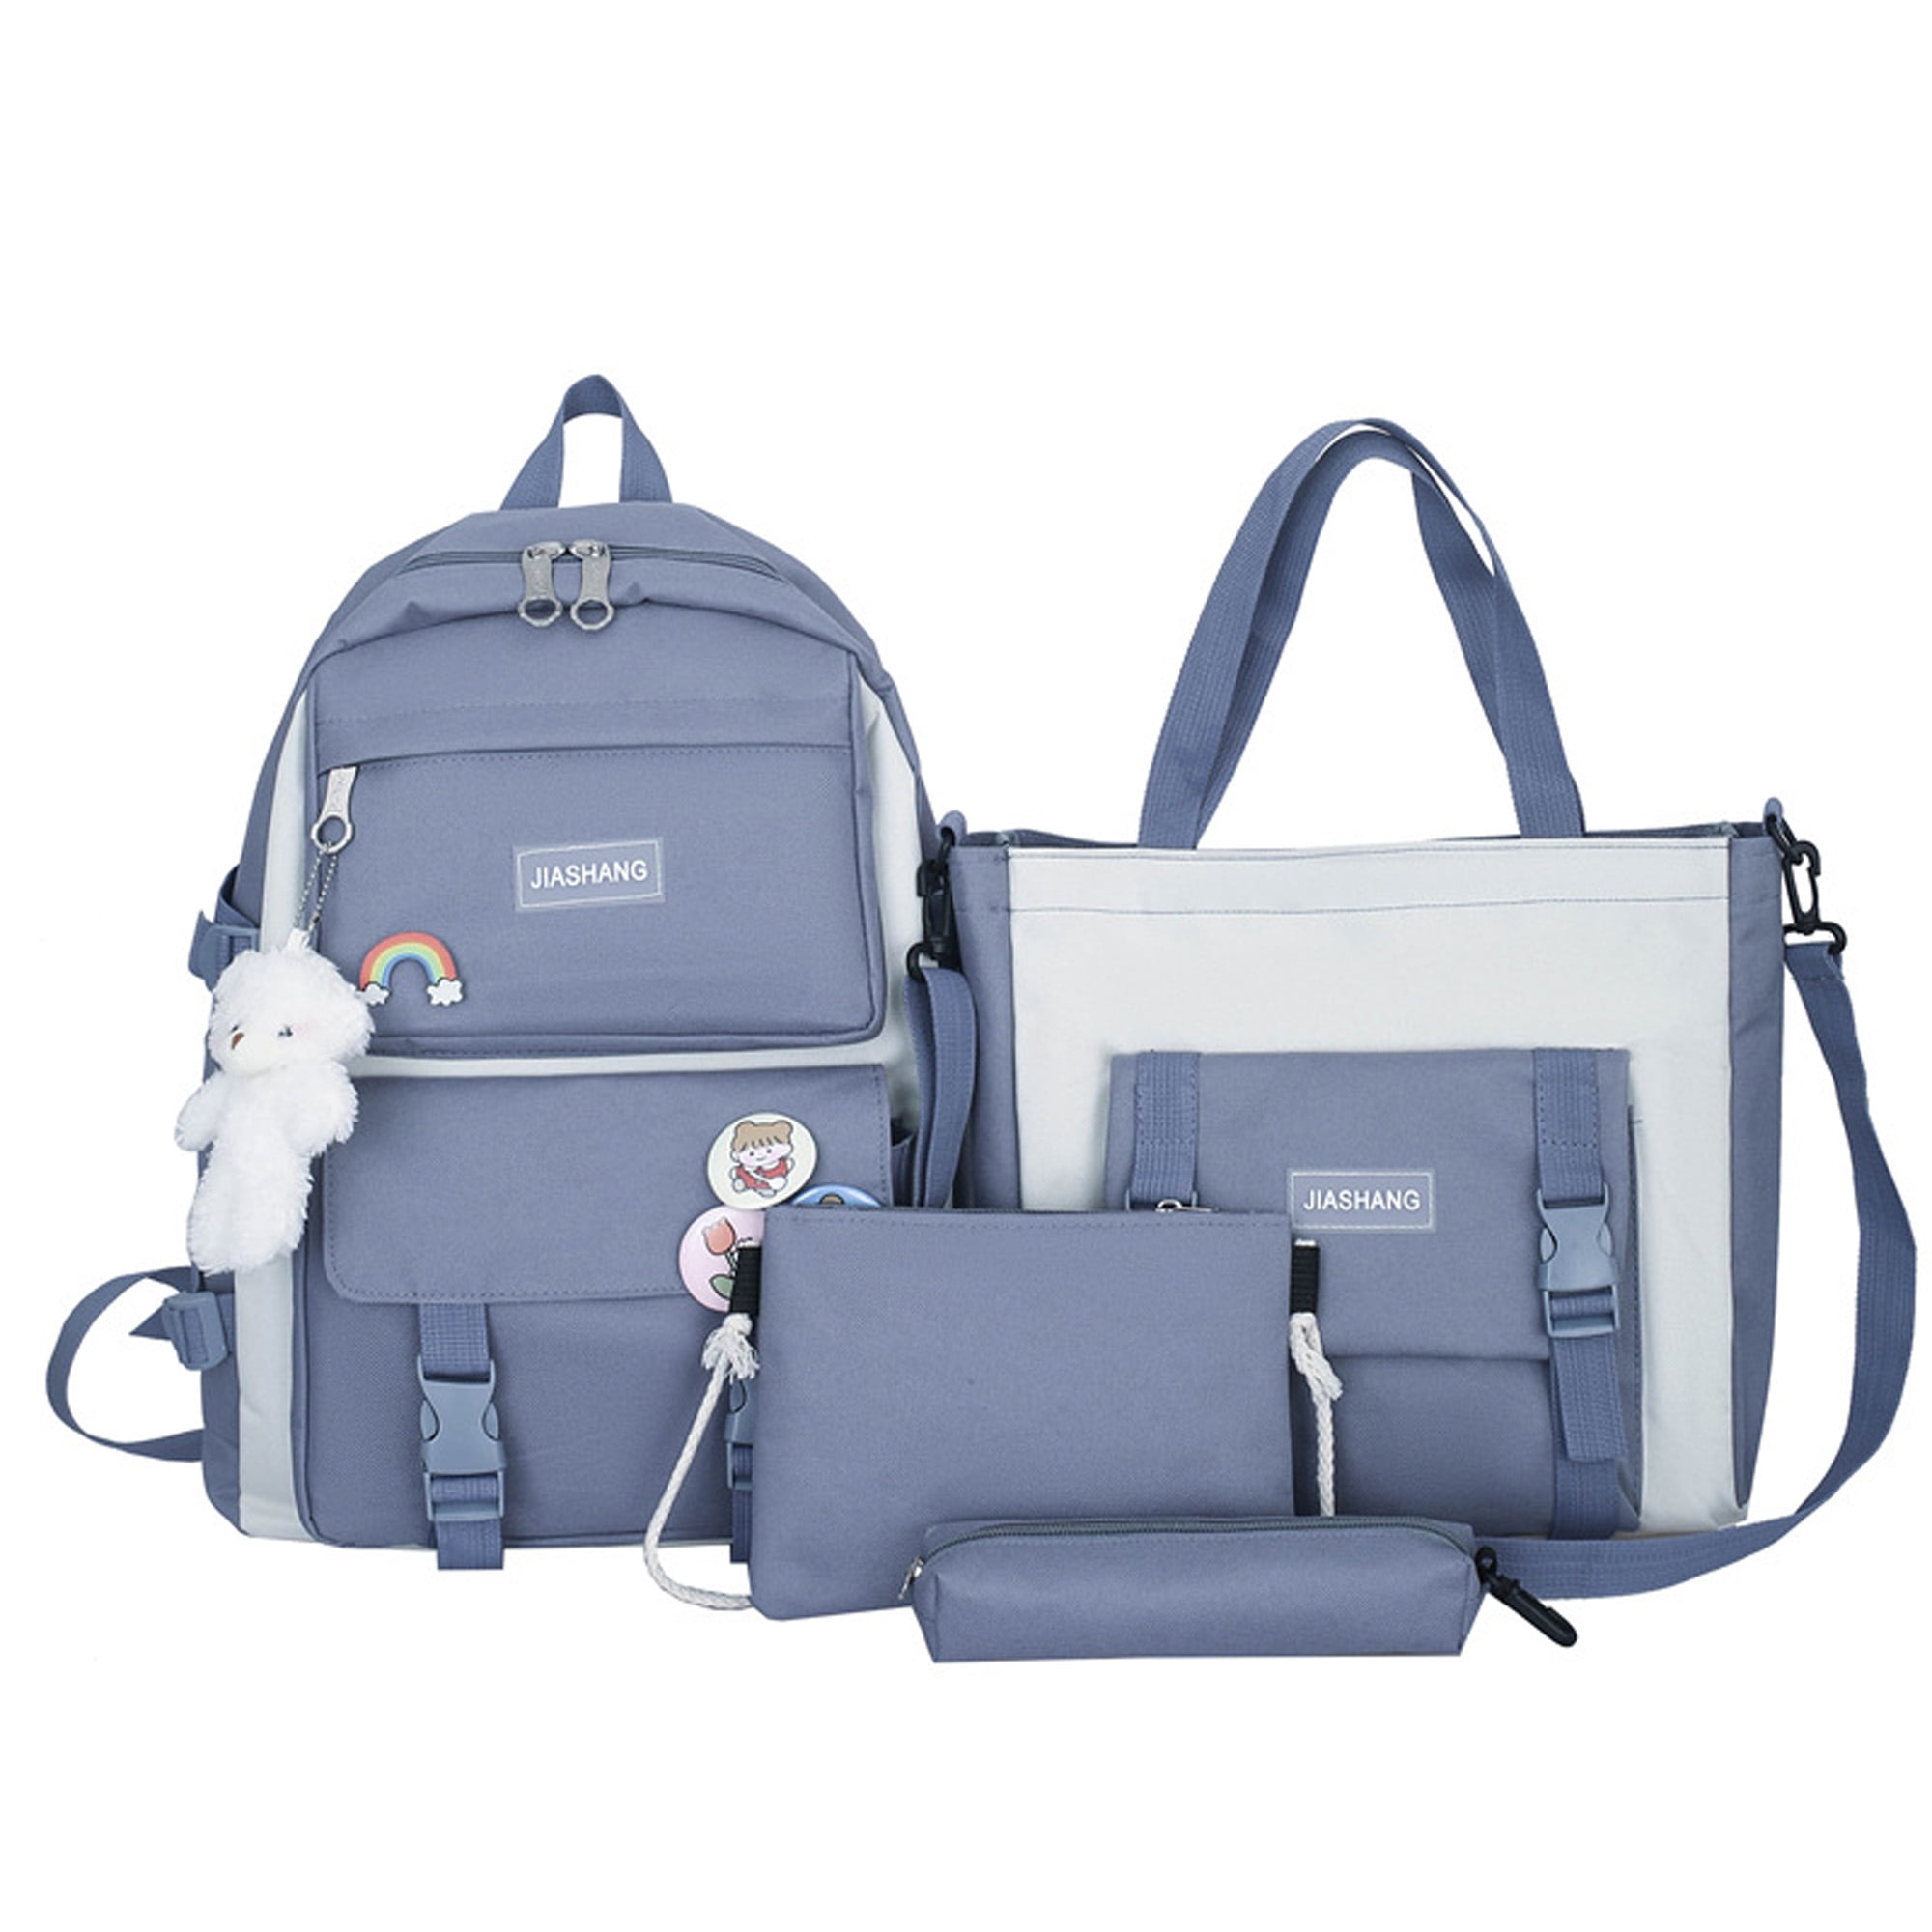 4 Piece Set Backpacks New Fashion School Bags For Teenage Girls